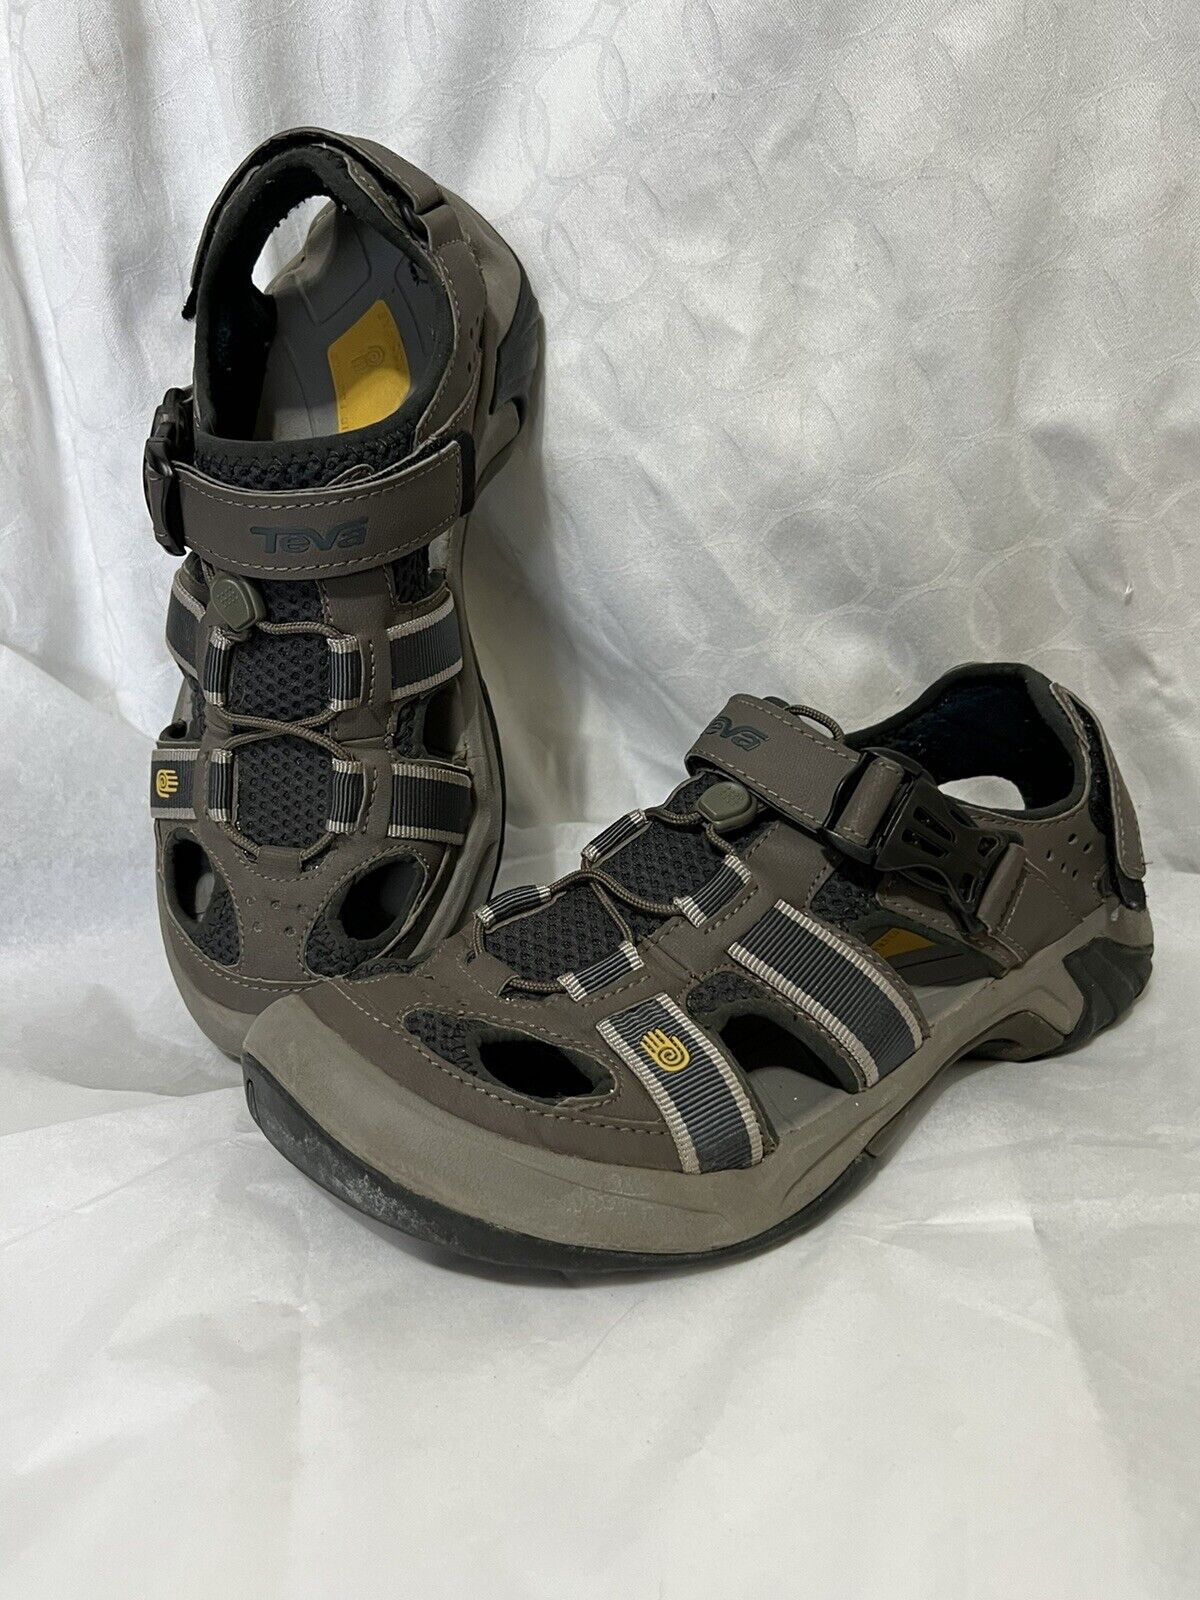 Teva 6148 Omnium Water Sport Hiking 8 M Closed Shoes | eBay